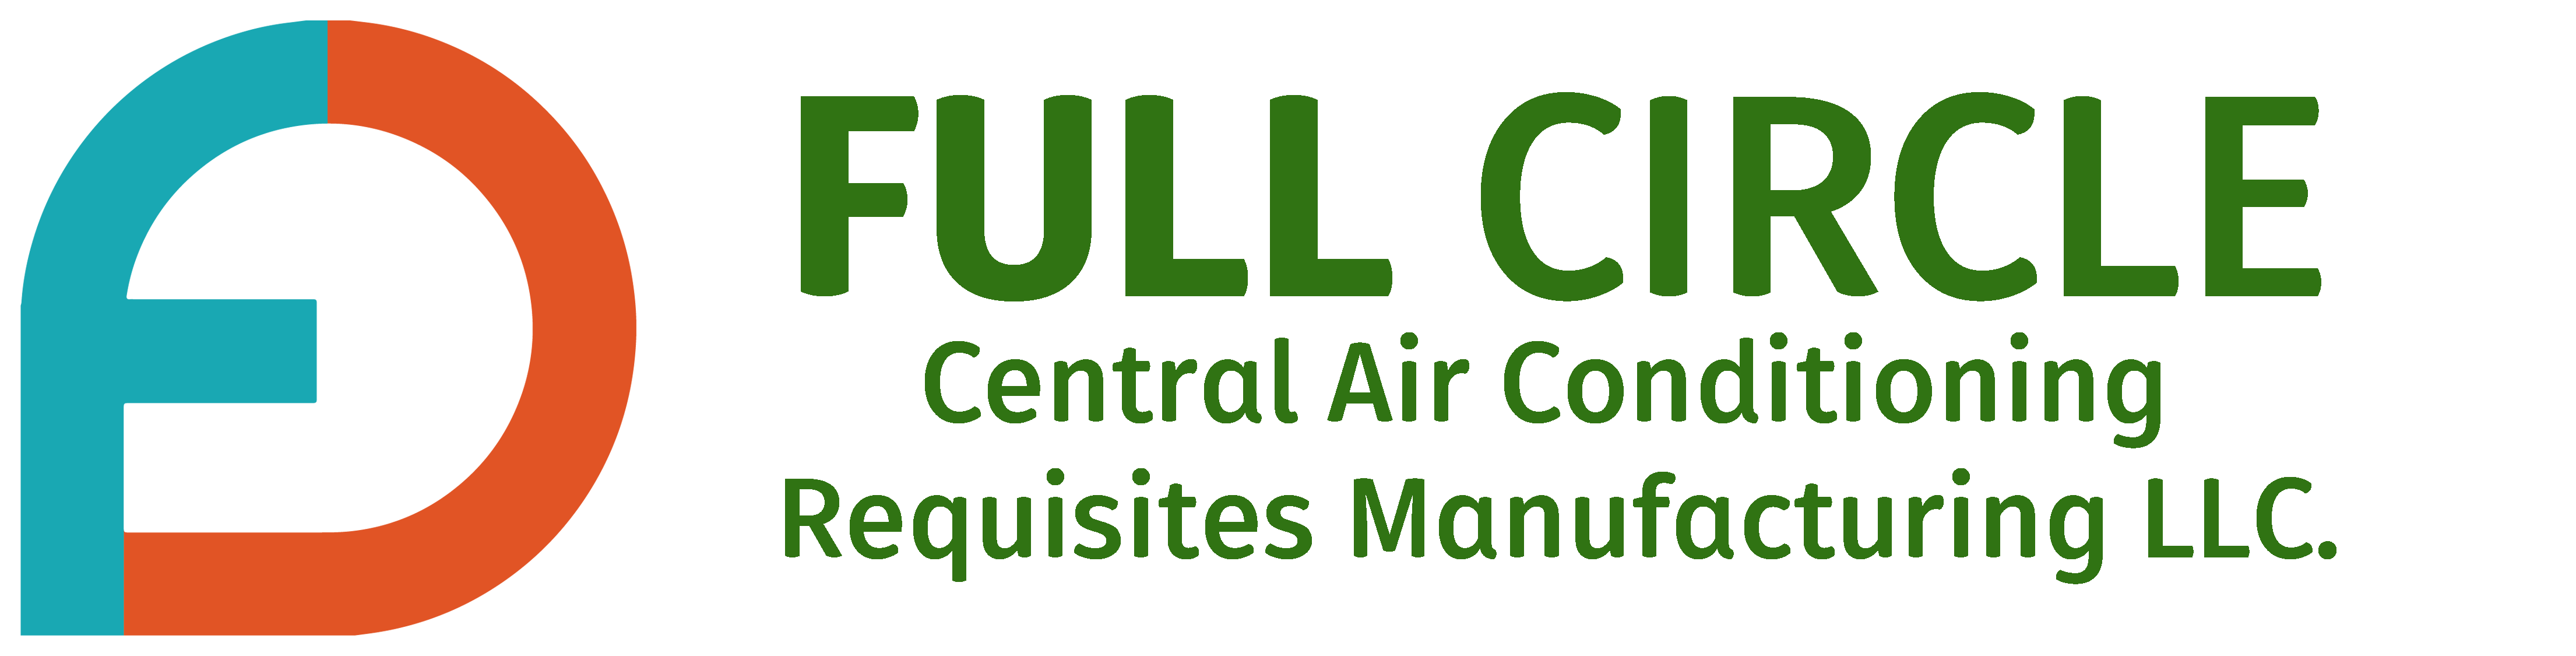 FULL CIRCLE CENTRAL AIR CONDITIONING REQUISITES MANUFACTURING L.L.C.